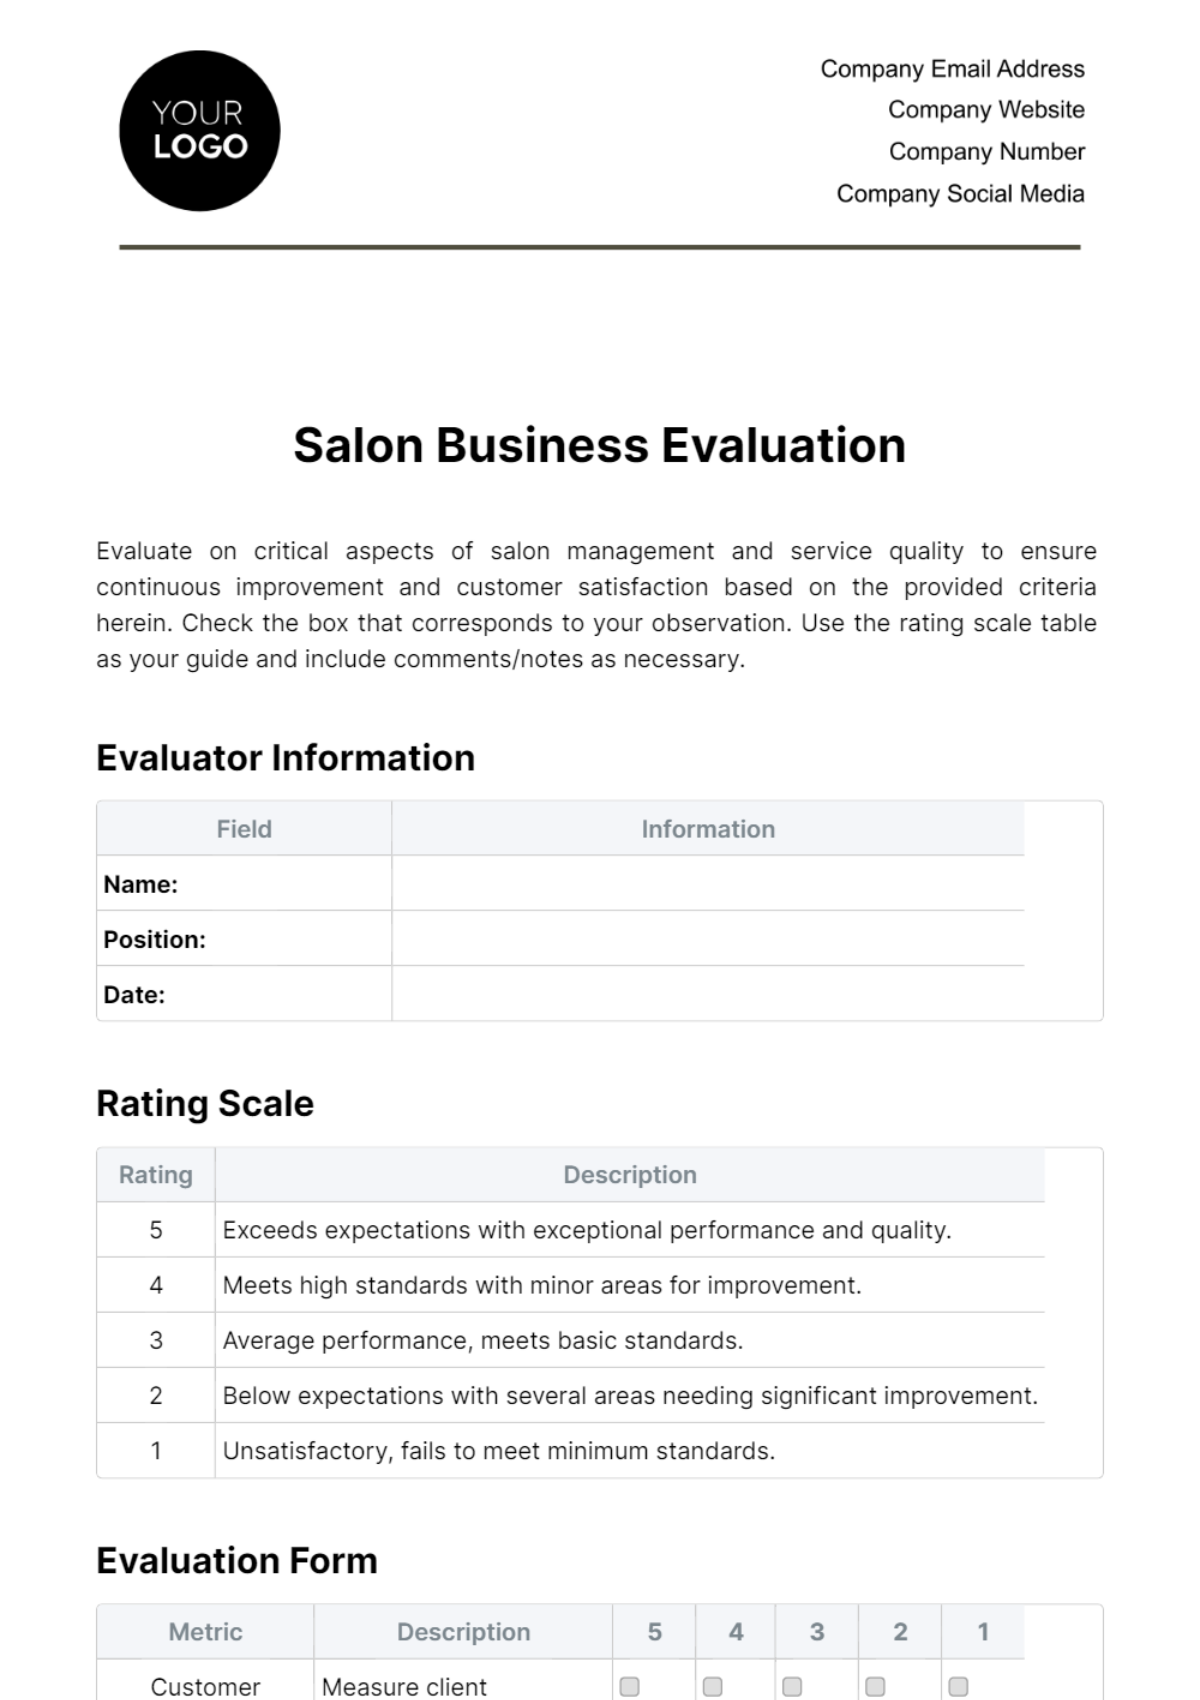 Free Salon Business Evaluation Template